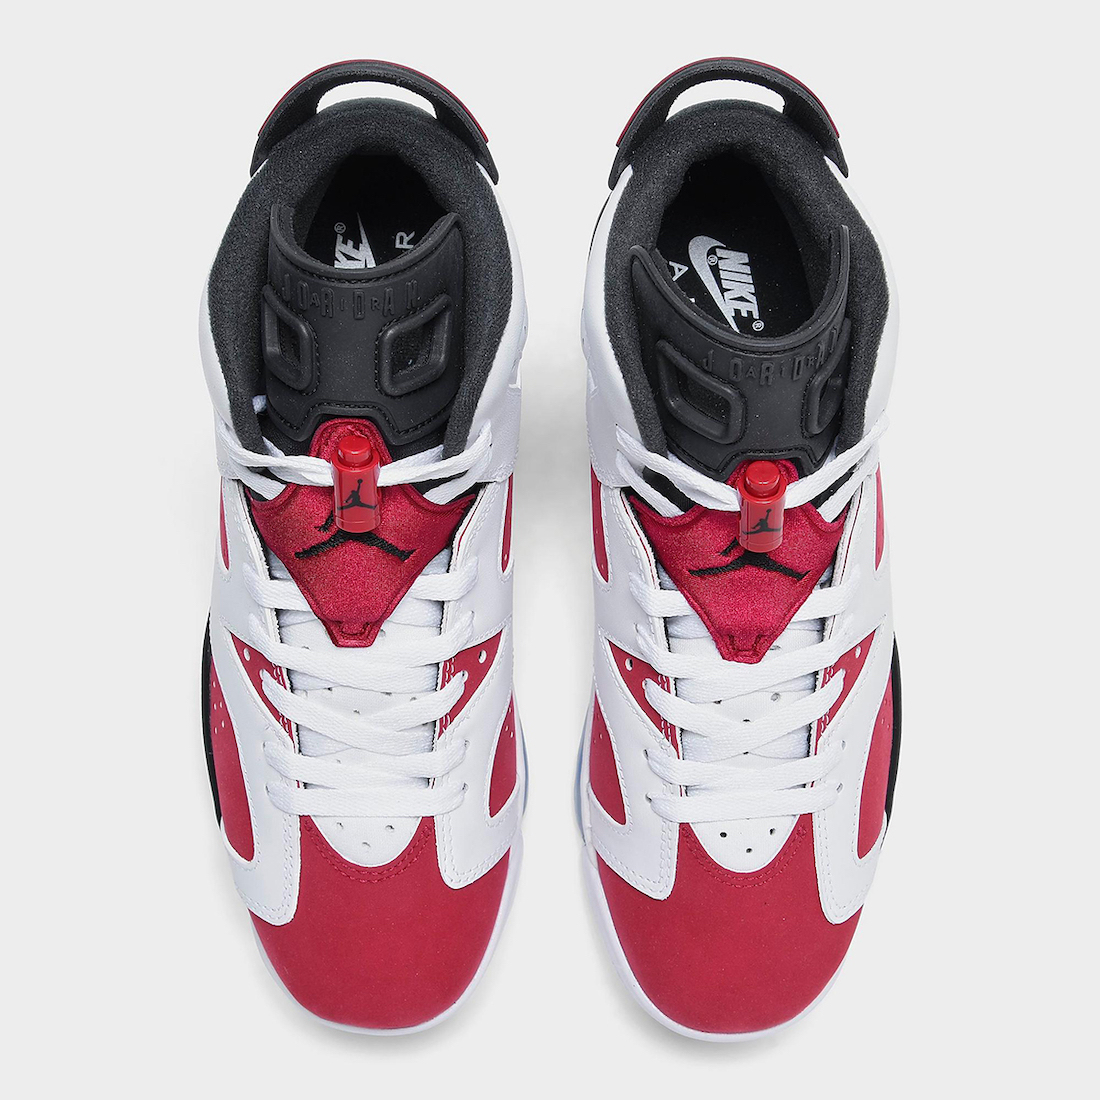 Nike Air, NIKE, Jordan Brand, Jordan, Carmine, Air Jordan 6“ Carmine”, Air Jordan 6, Air Jordan